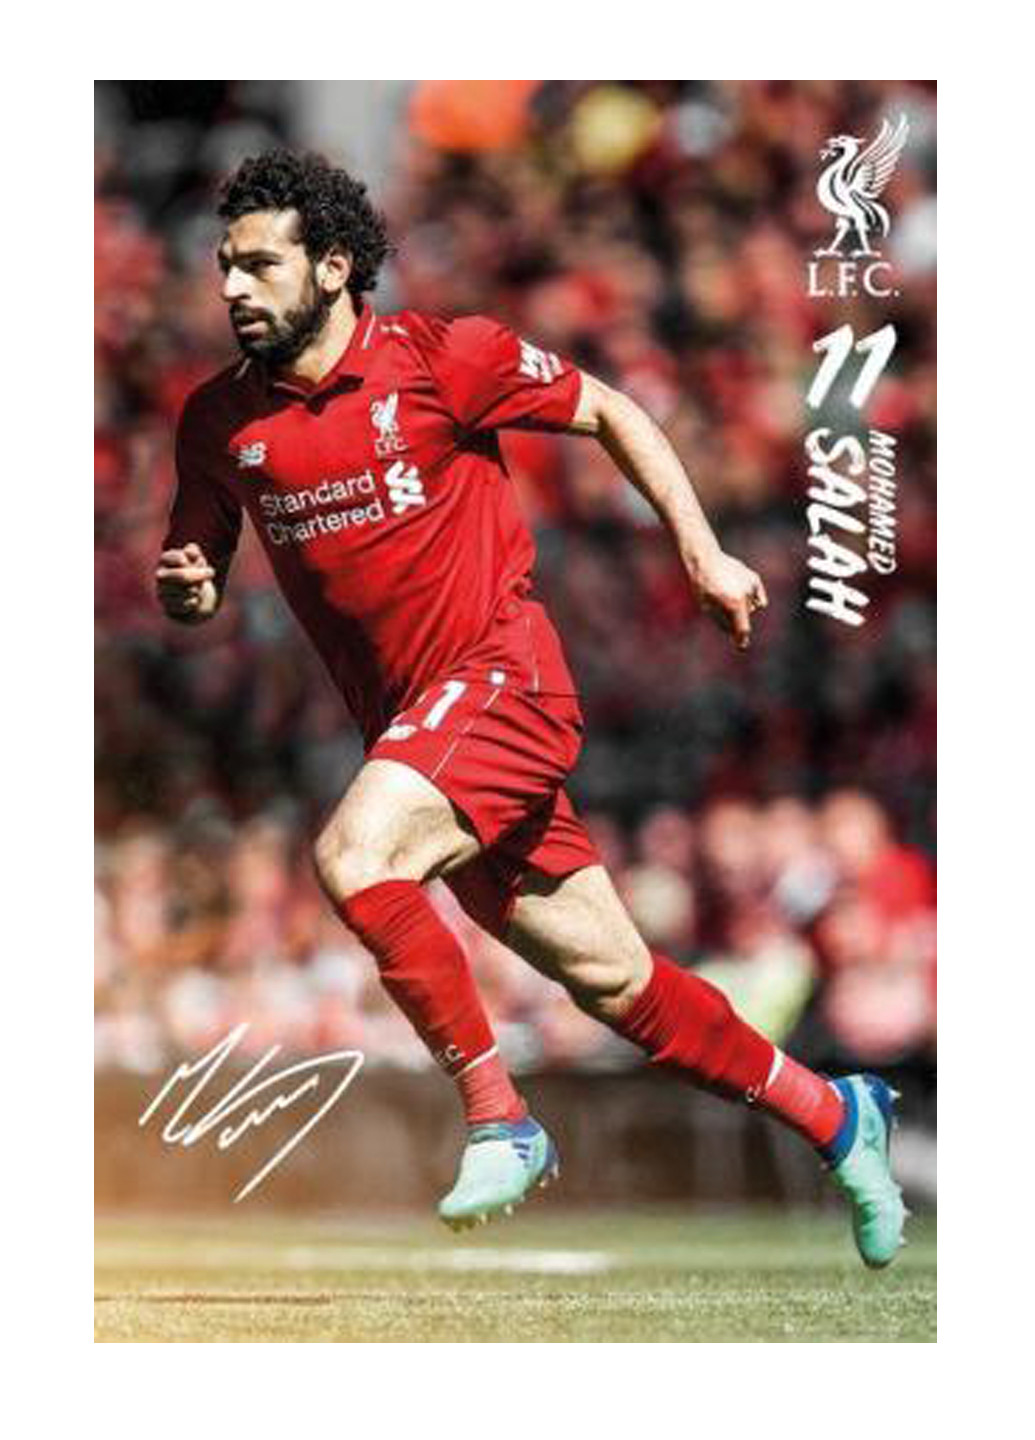 Постер GB eye Liverpool Maxi Poster - Salah 18-19 Gbeye (221793647)